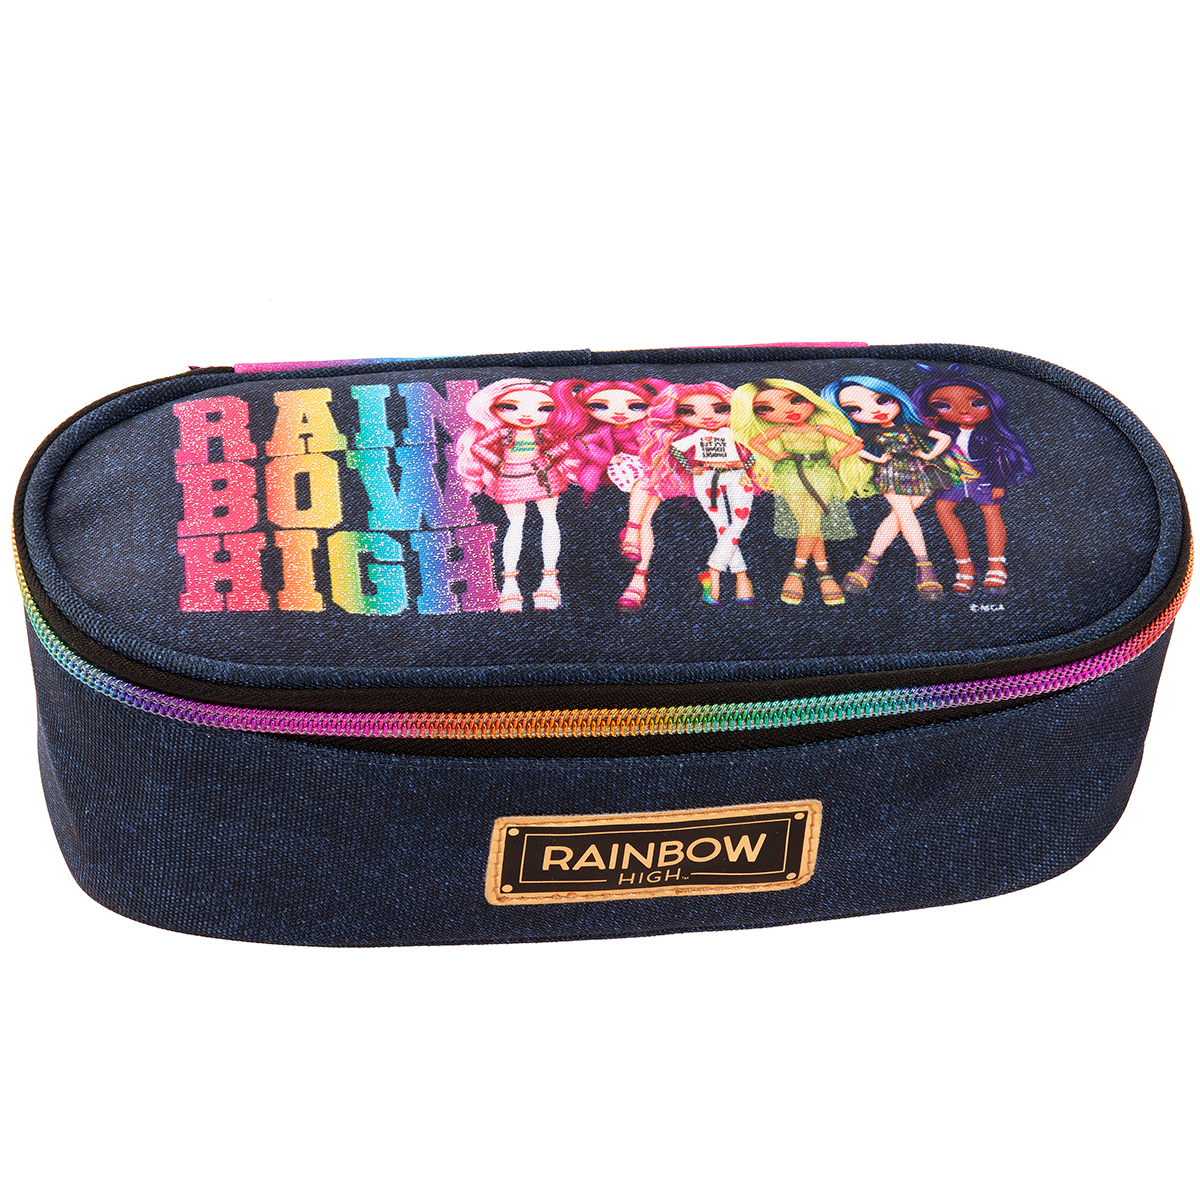 Rainbow High Pencil Case Oval Fashion - 22 x 6 x 9.5 cm - Polyester